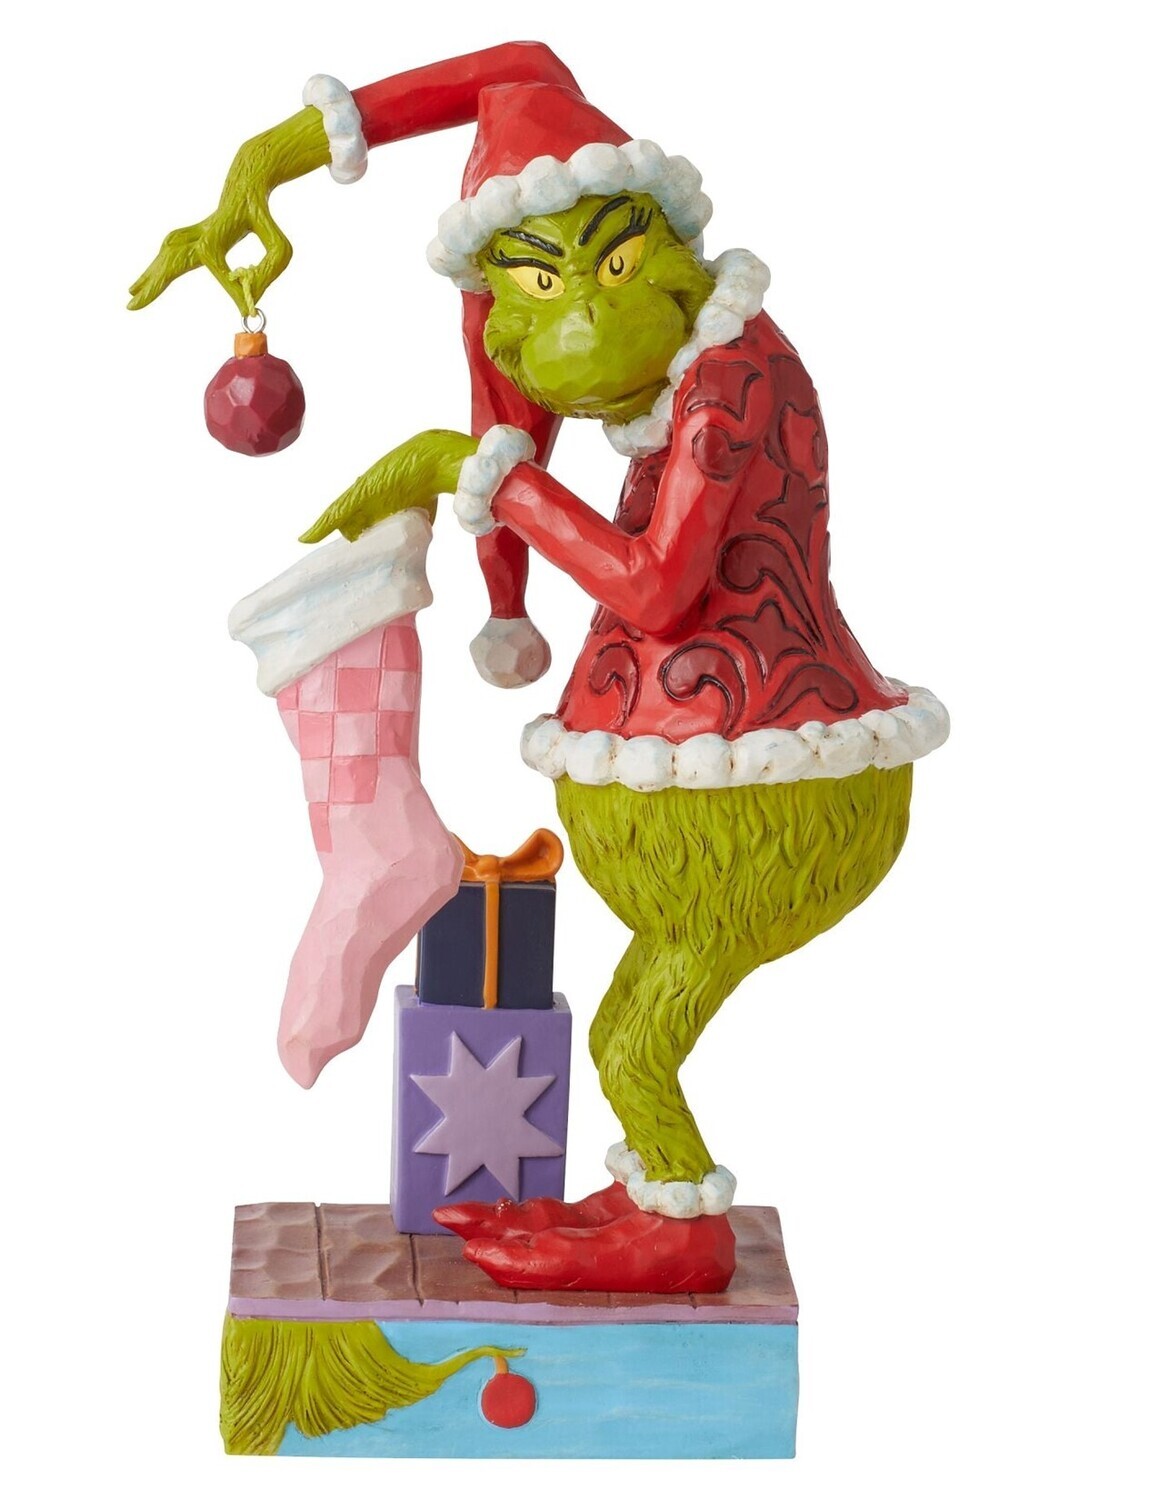 Jim Shore "Grinch Stealing Ornaments" Figurine (6010781)